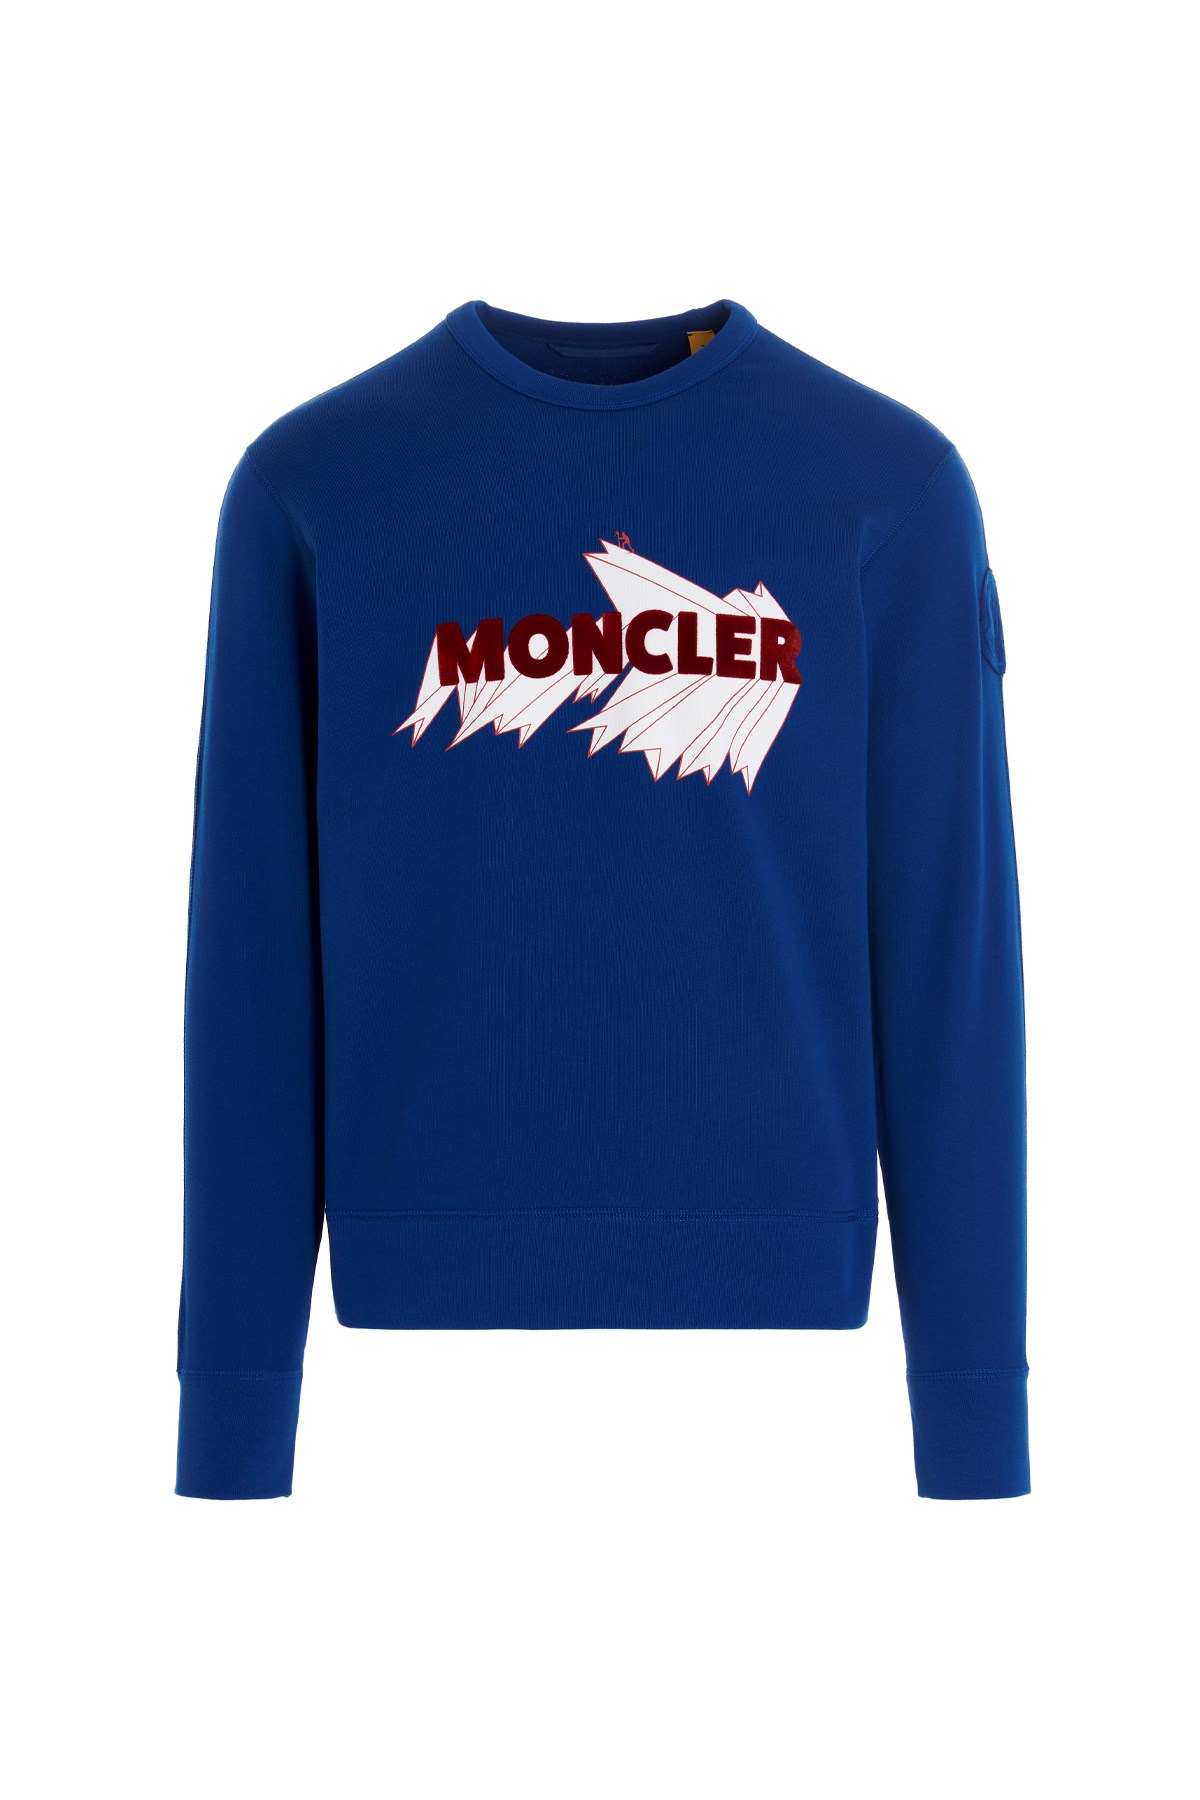 MONCLER GENIUS Moncler Genius X 1952 Capsule Sweatshirt